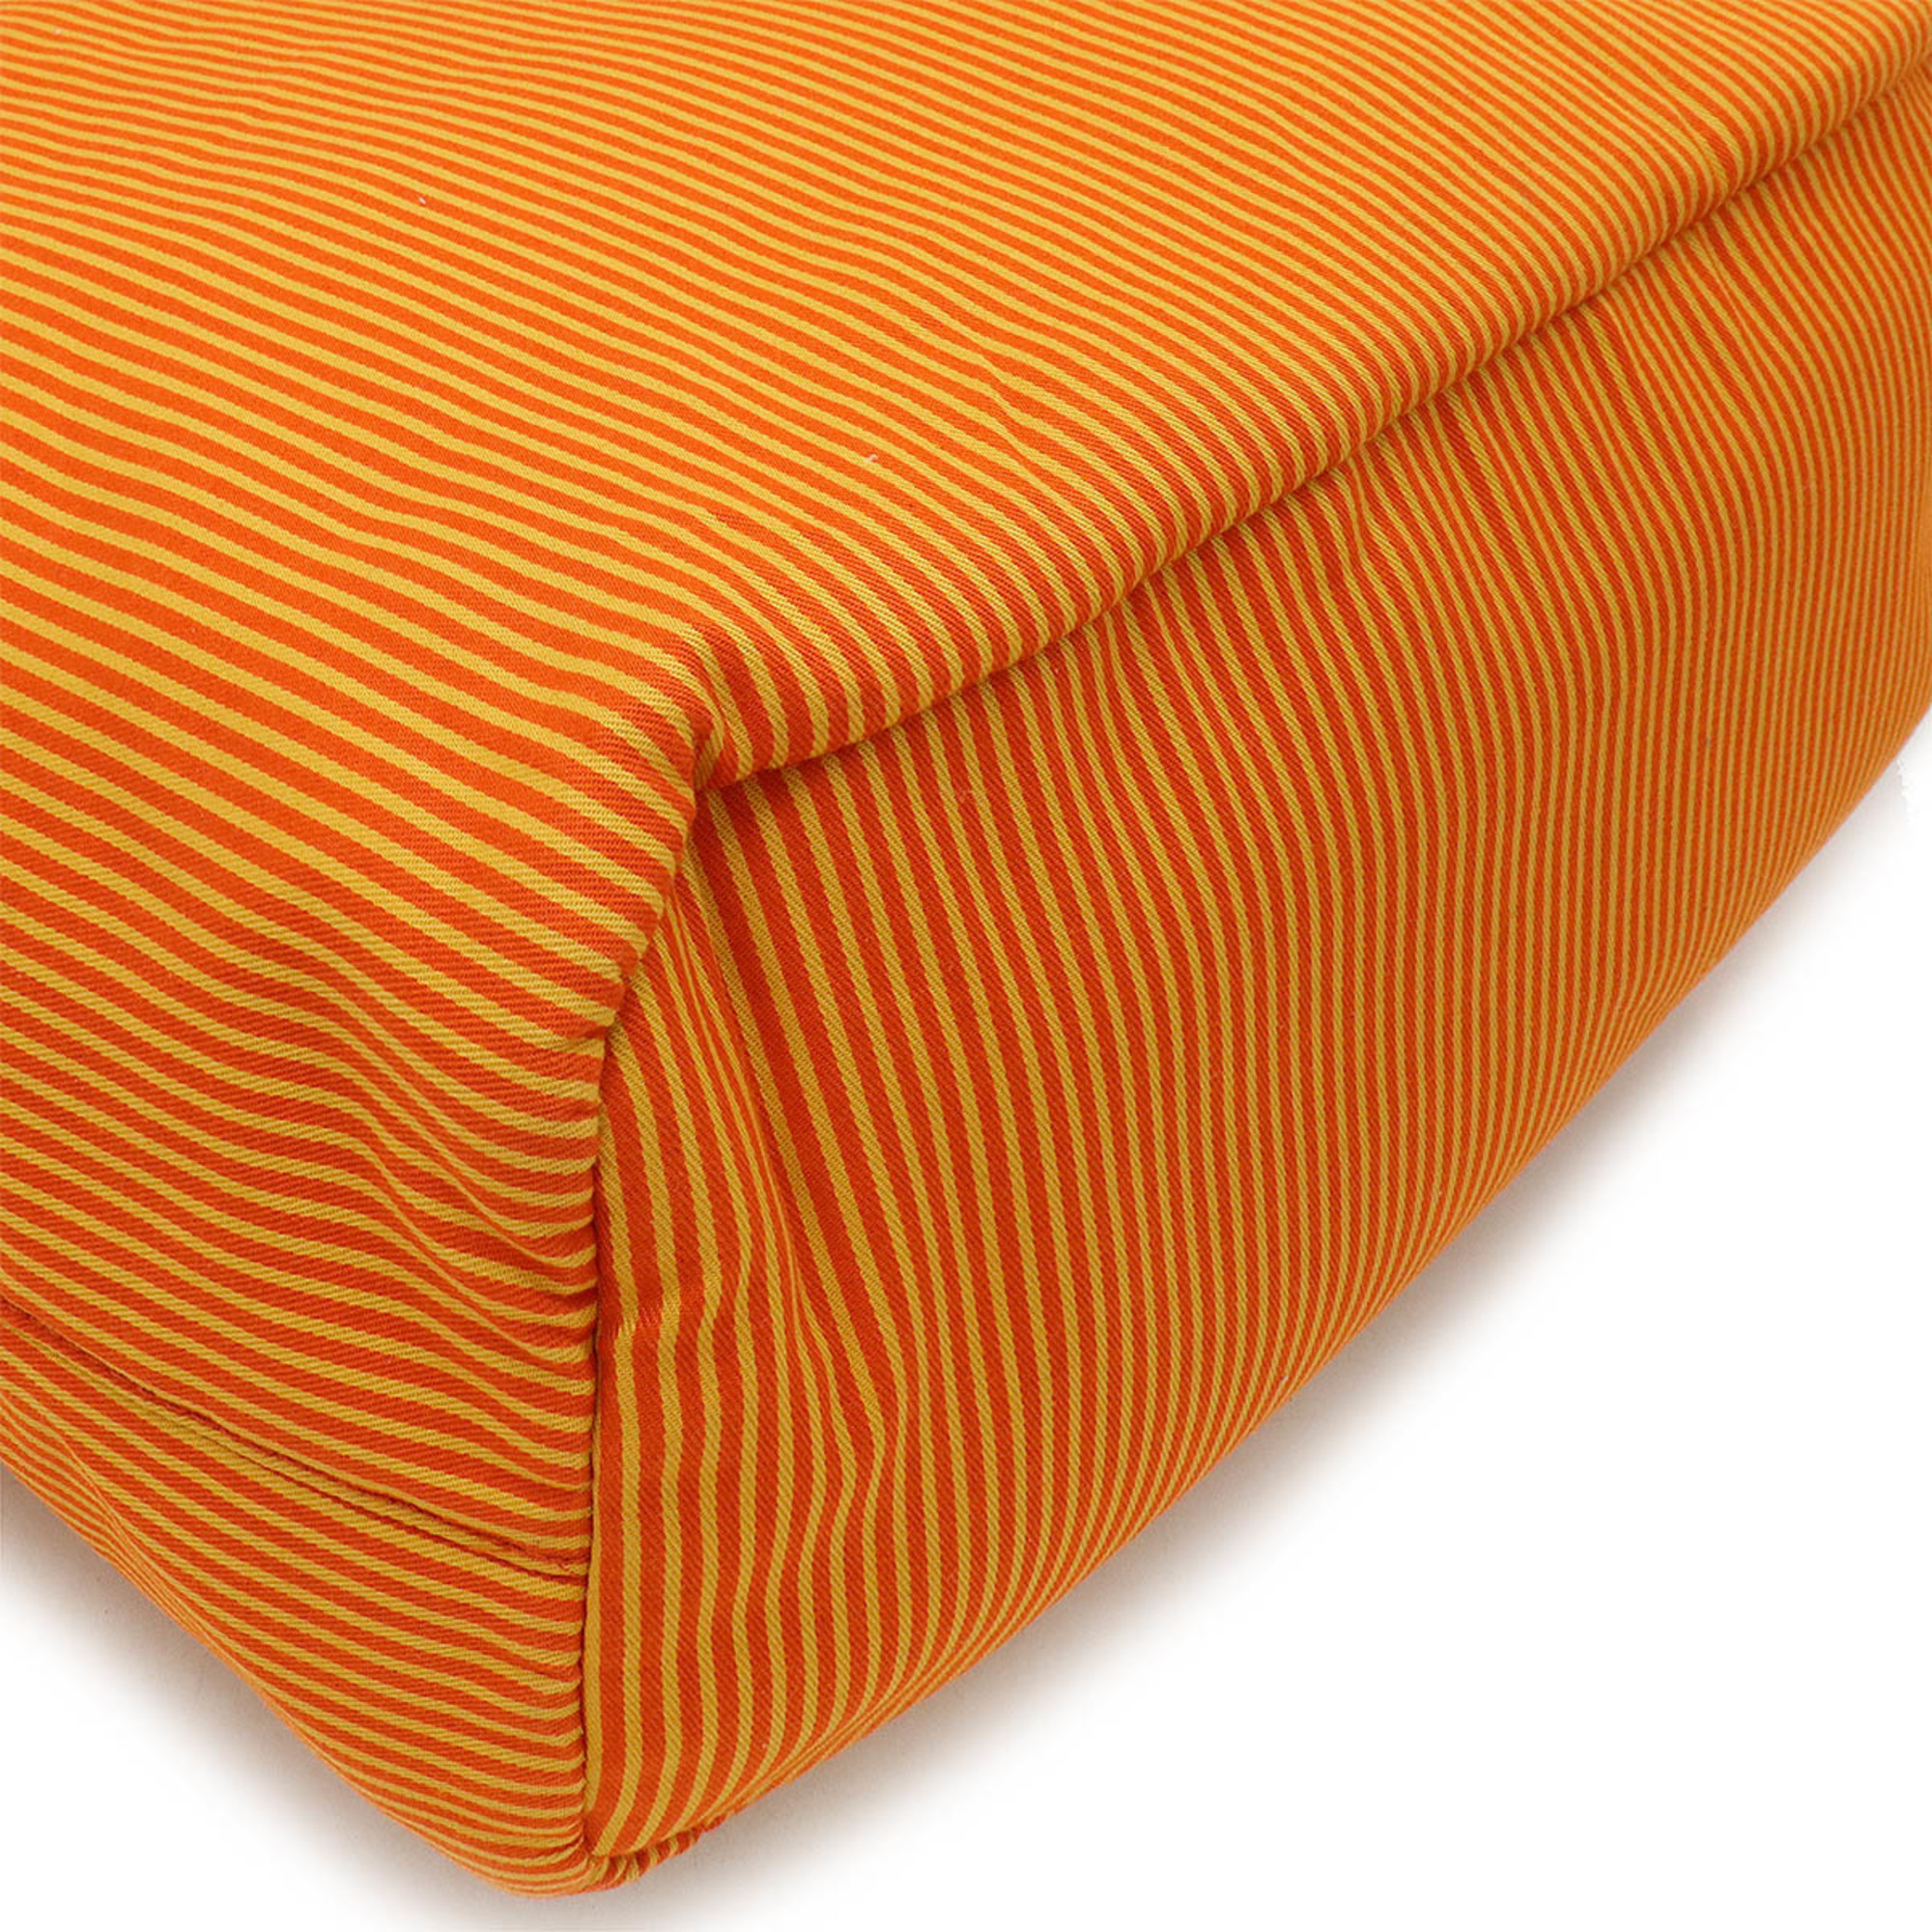 PRADA Prada Tote Bag Handbag Shoulder Striped Canvas Leather Orange B2052G